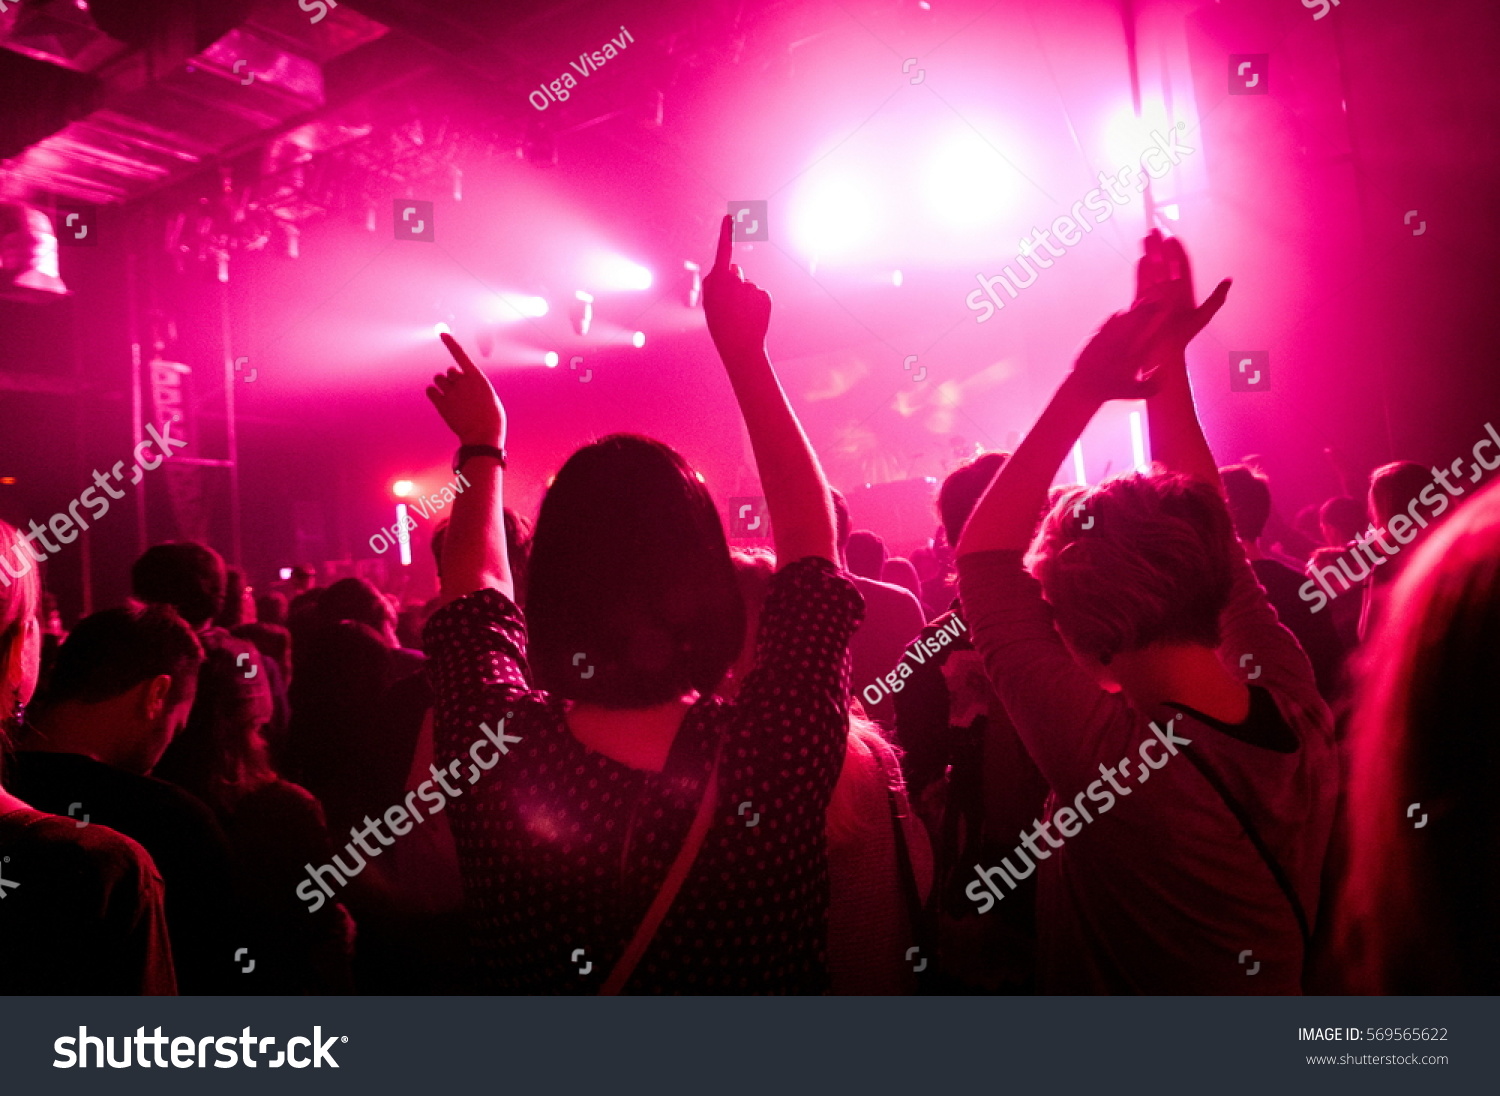 Two Girls Hands Concert Music Club Stock Photo 569565622 - Shutterstock